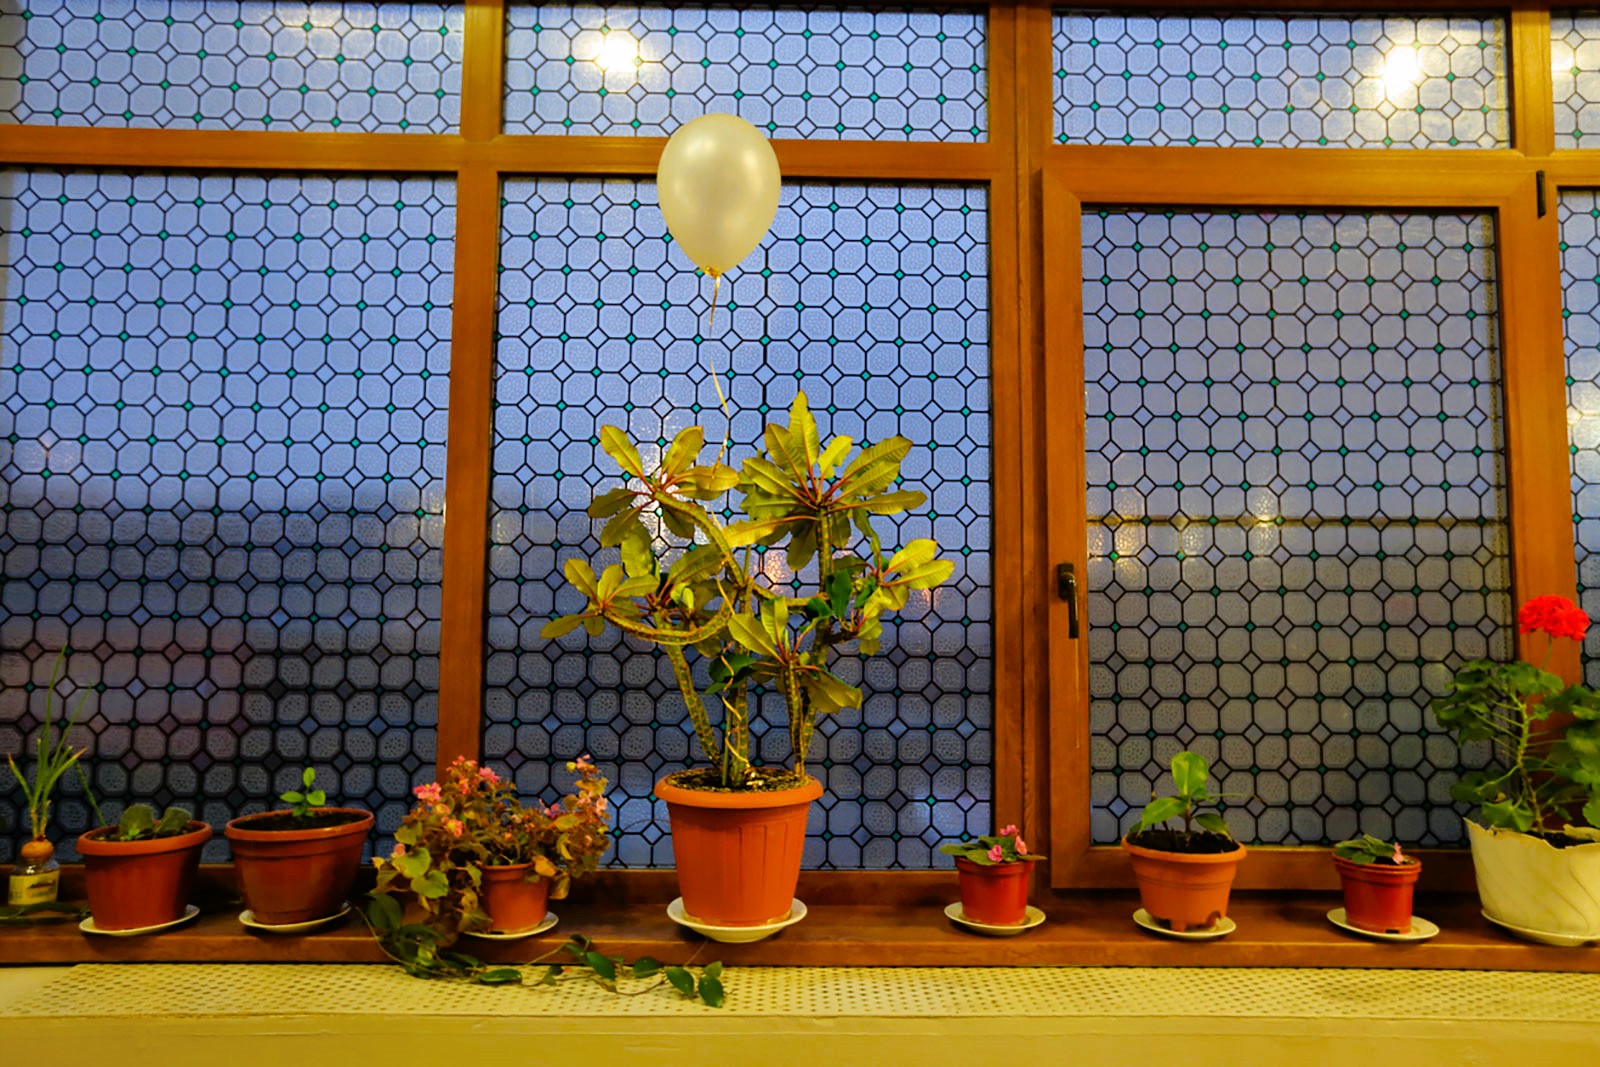 Flowers in front of window